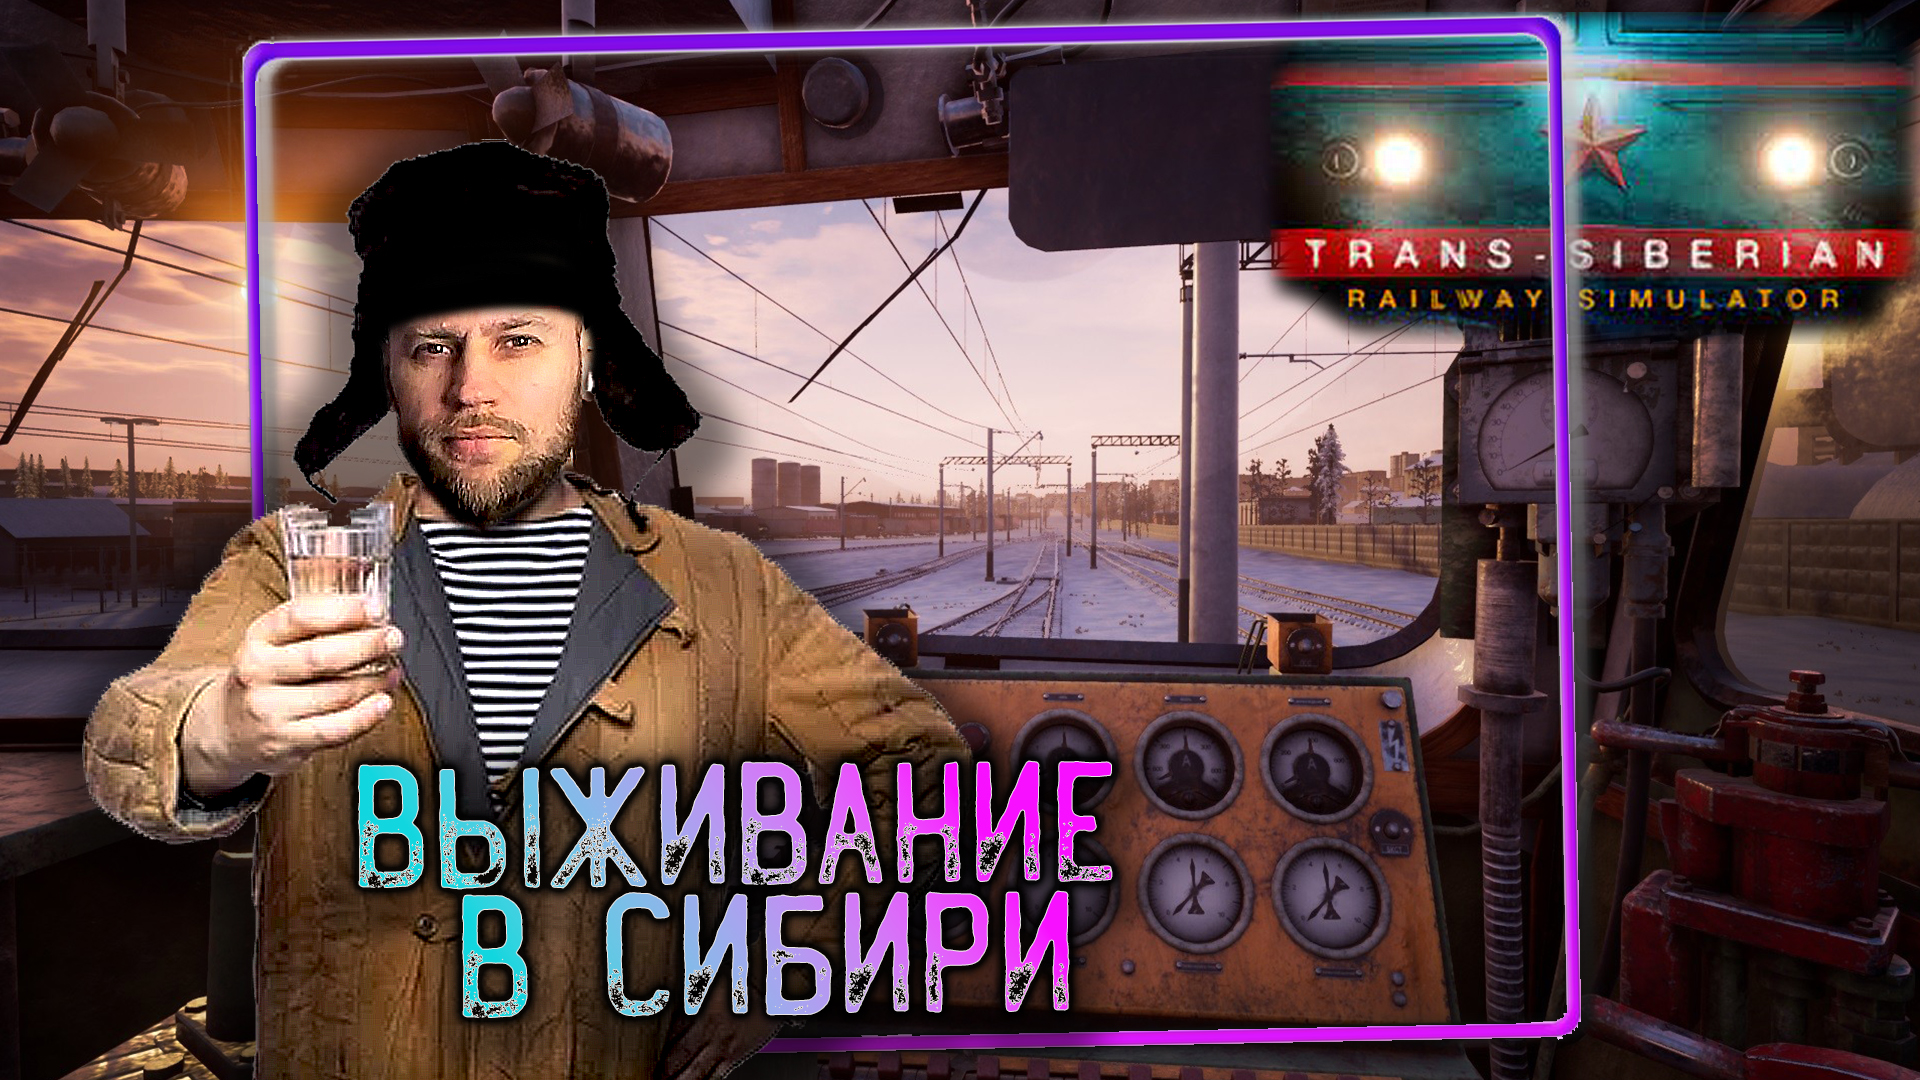 Trans siberian railway simulator стим фото 91